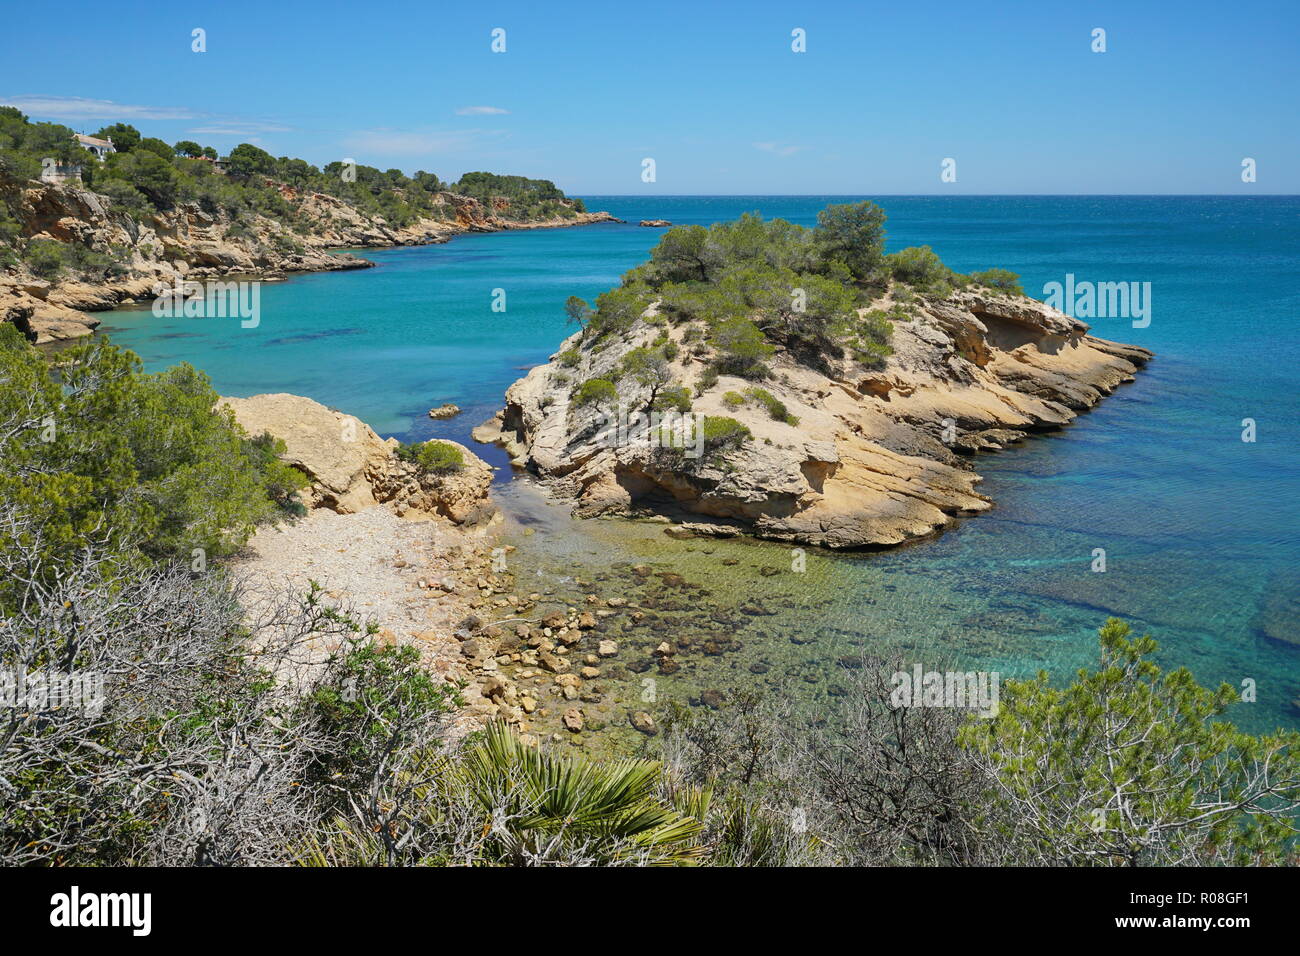 Spain Costa Dorada, rocky coast with an islet, l'Illot, Mediterranean sea, Catalonia, L'Ametlla de Mar, Tarragona Stock Photo